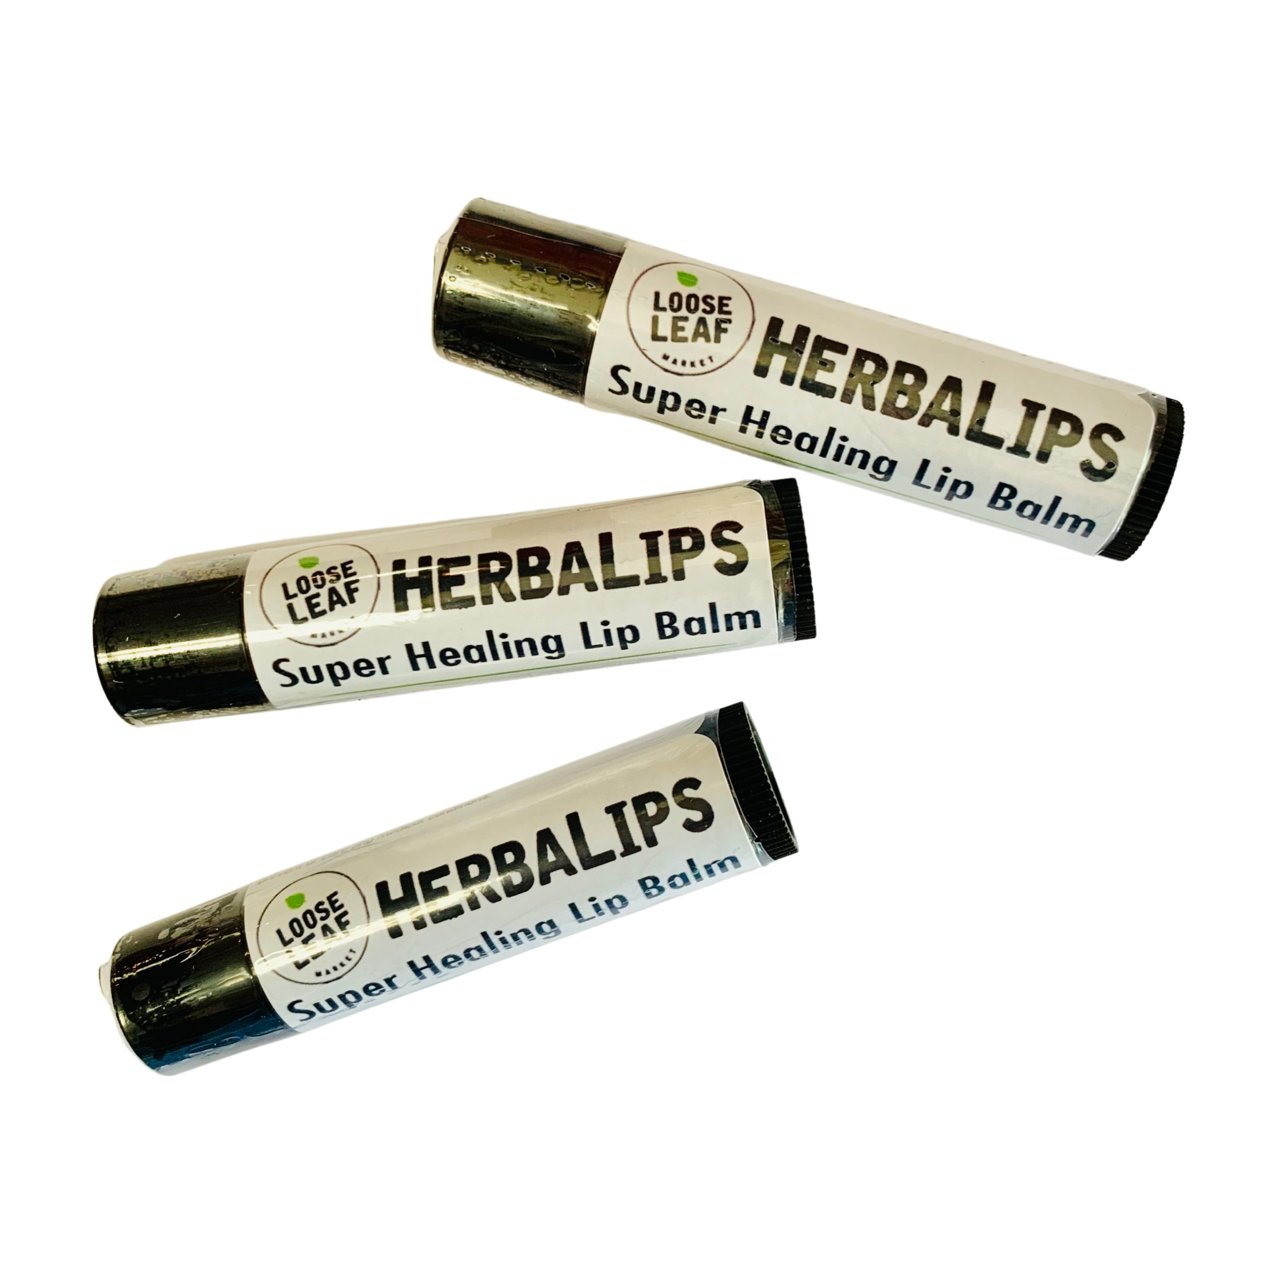 HerbaLips Super Healing Lip Balm - Loose Leaf Tea Market